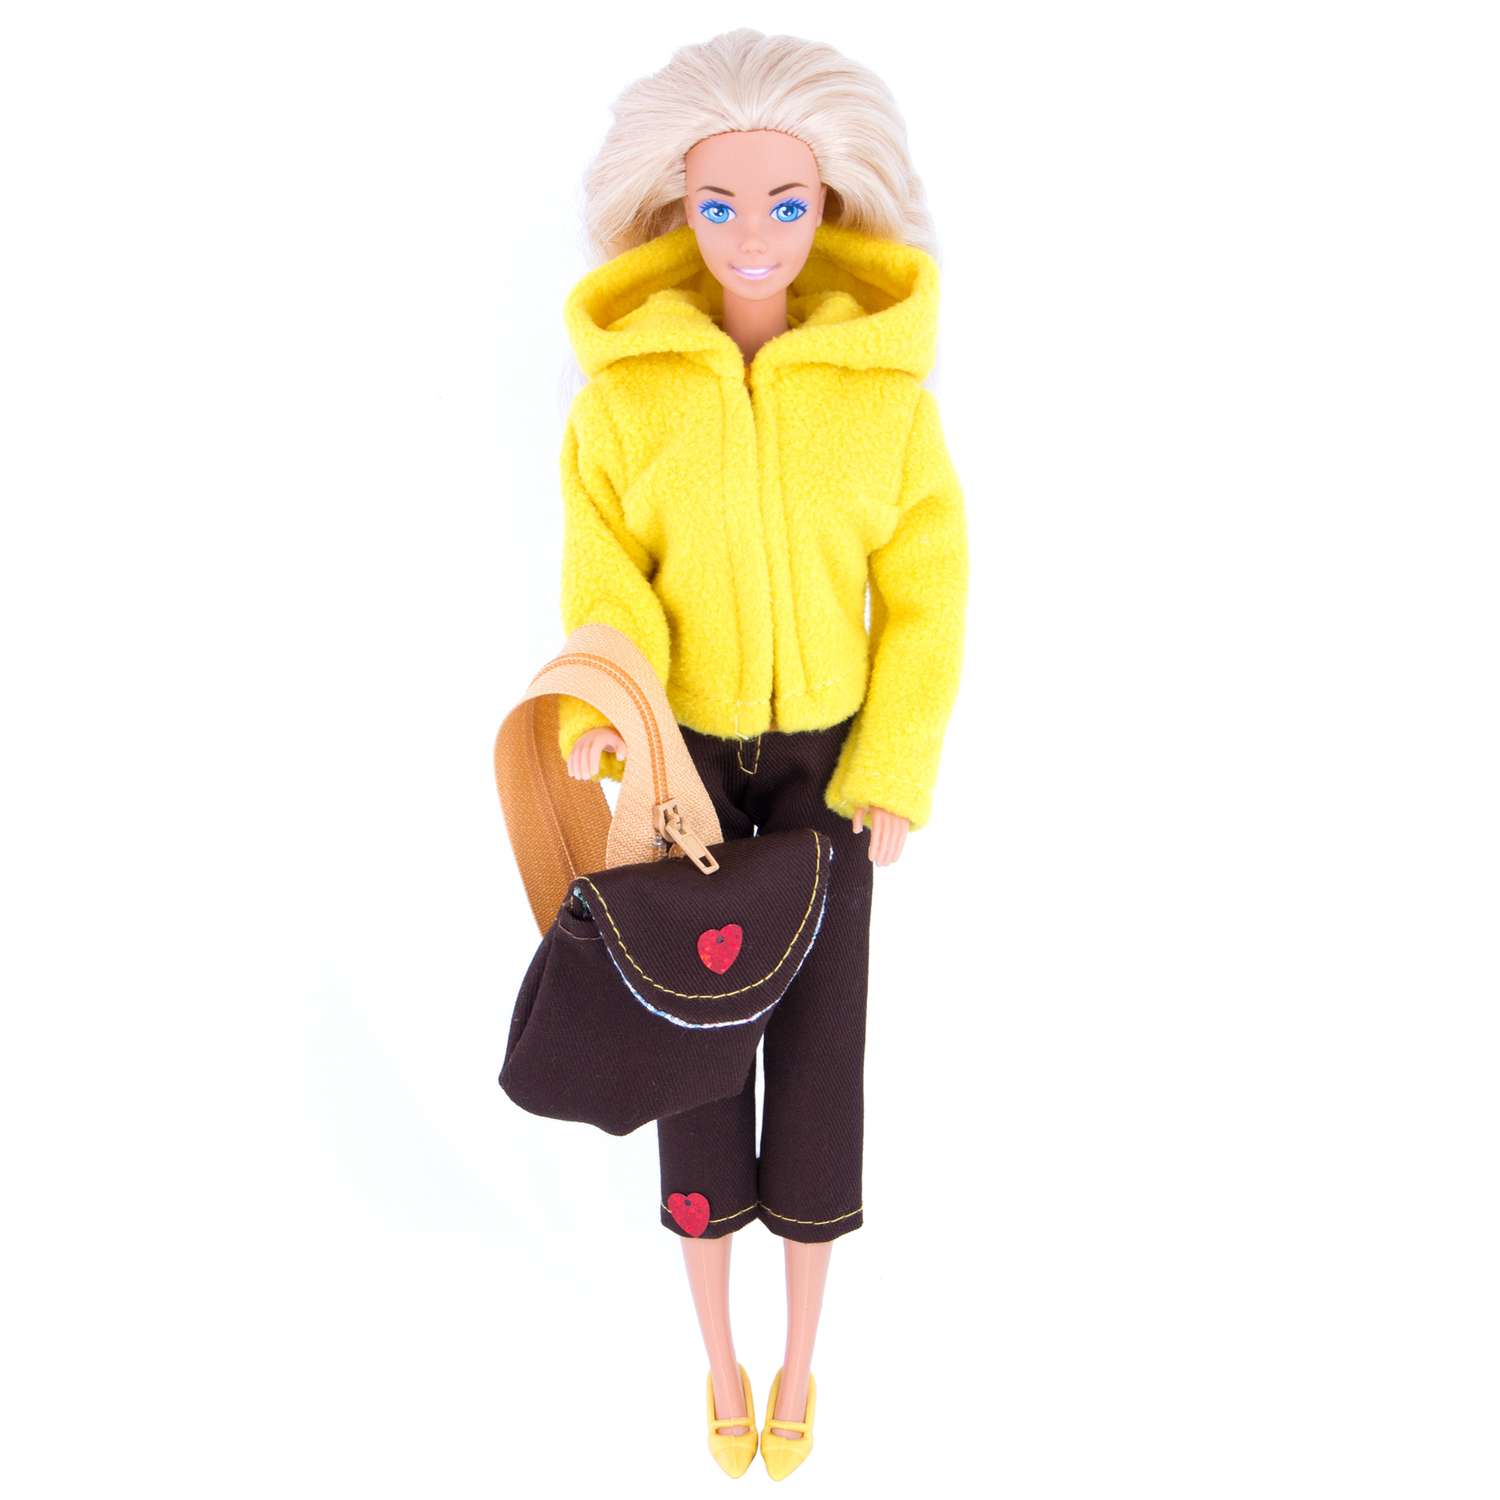 Набор одежды Модница для куклы 29 см 9999 желтый 9999желтый&amp;коричневый - фото 10